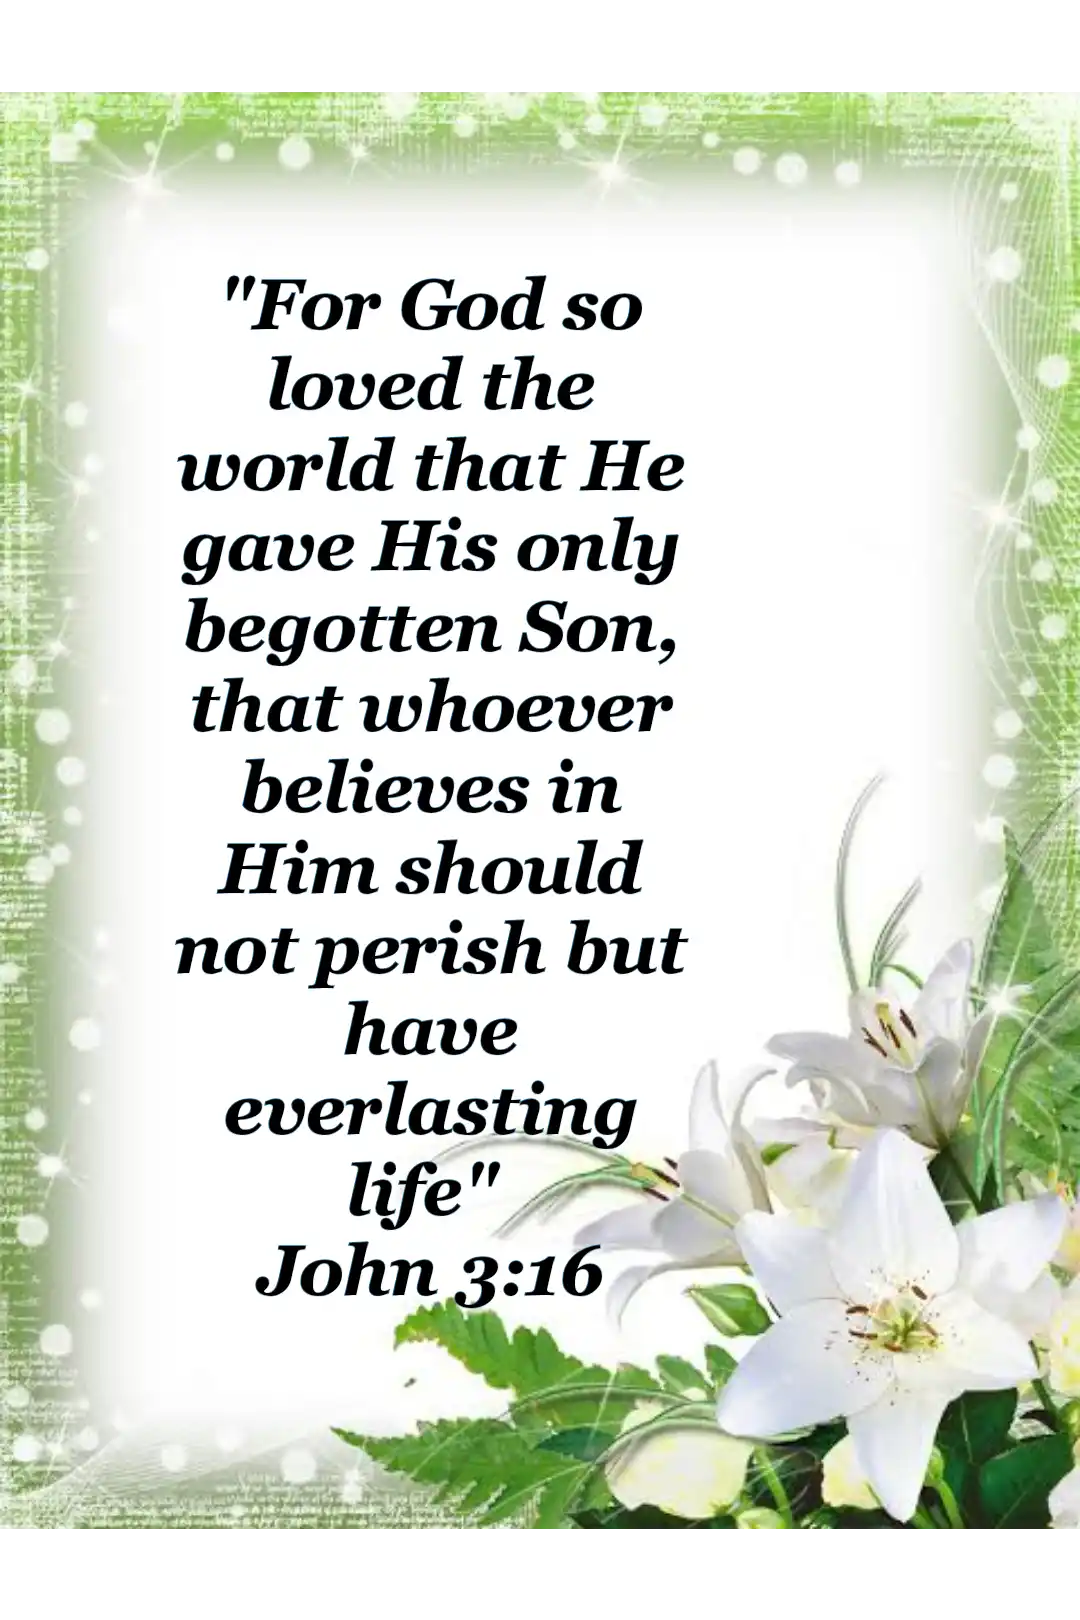 Bible-Verses_about_death-Image (John 3:16)